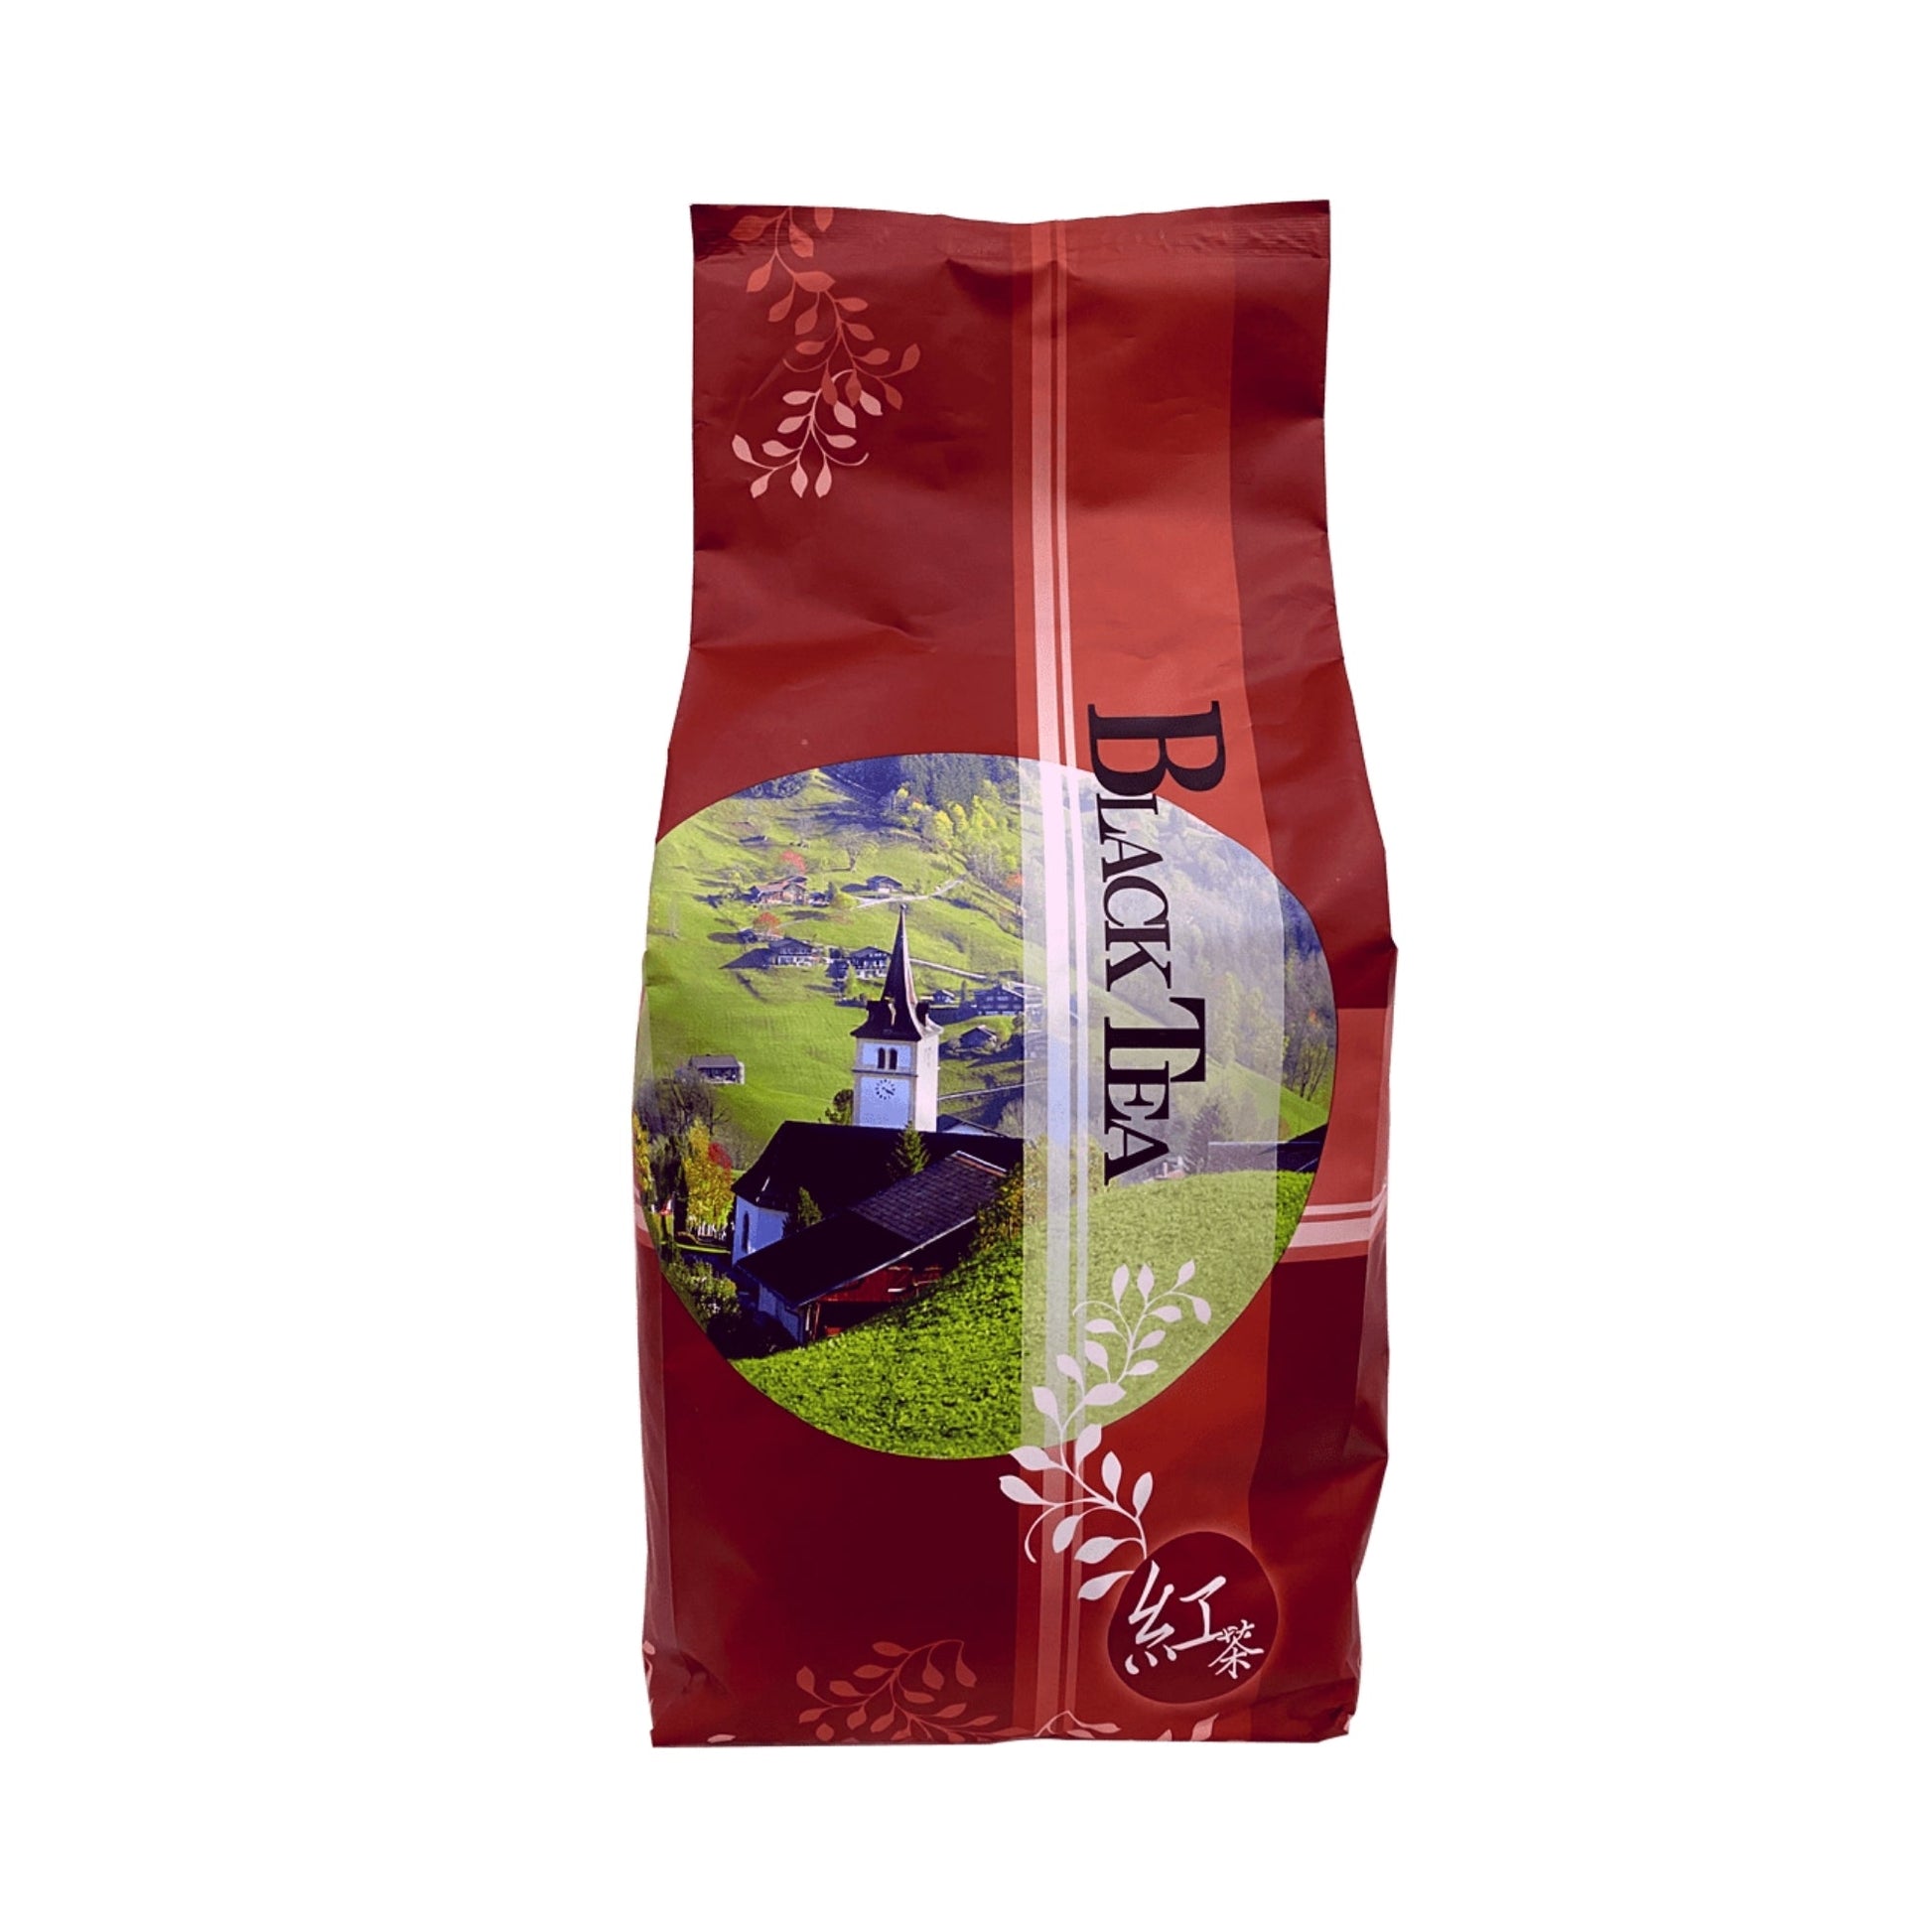 TOP Creamery Roasted Oolong Tea 600g - Kreme City Supplies